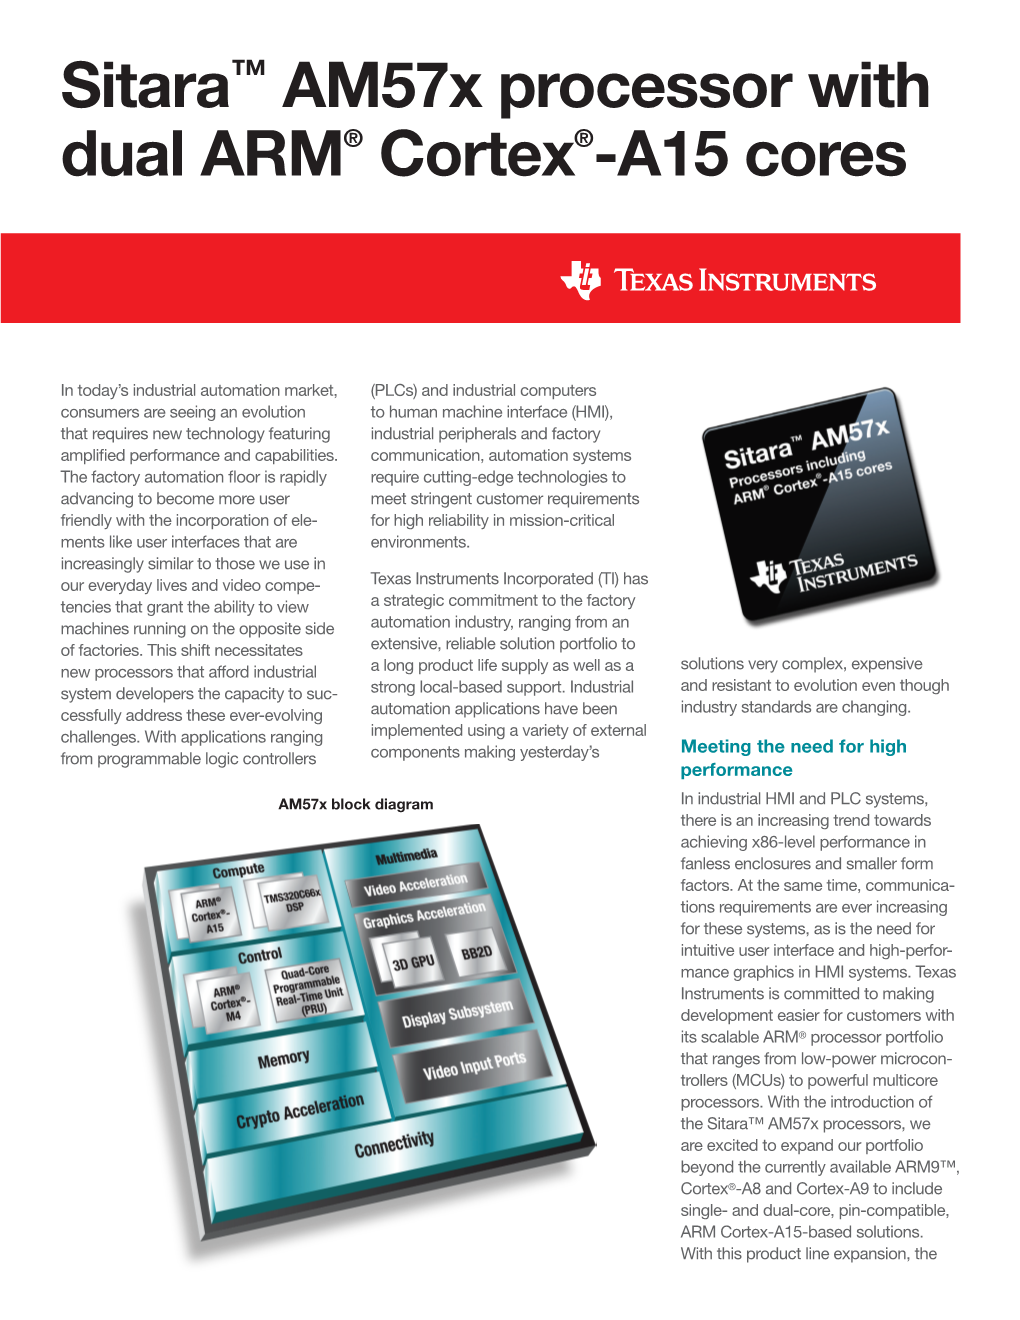 Sitara™ Am57x Processor with Dual ARM® Cortex®-A15 Cores